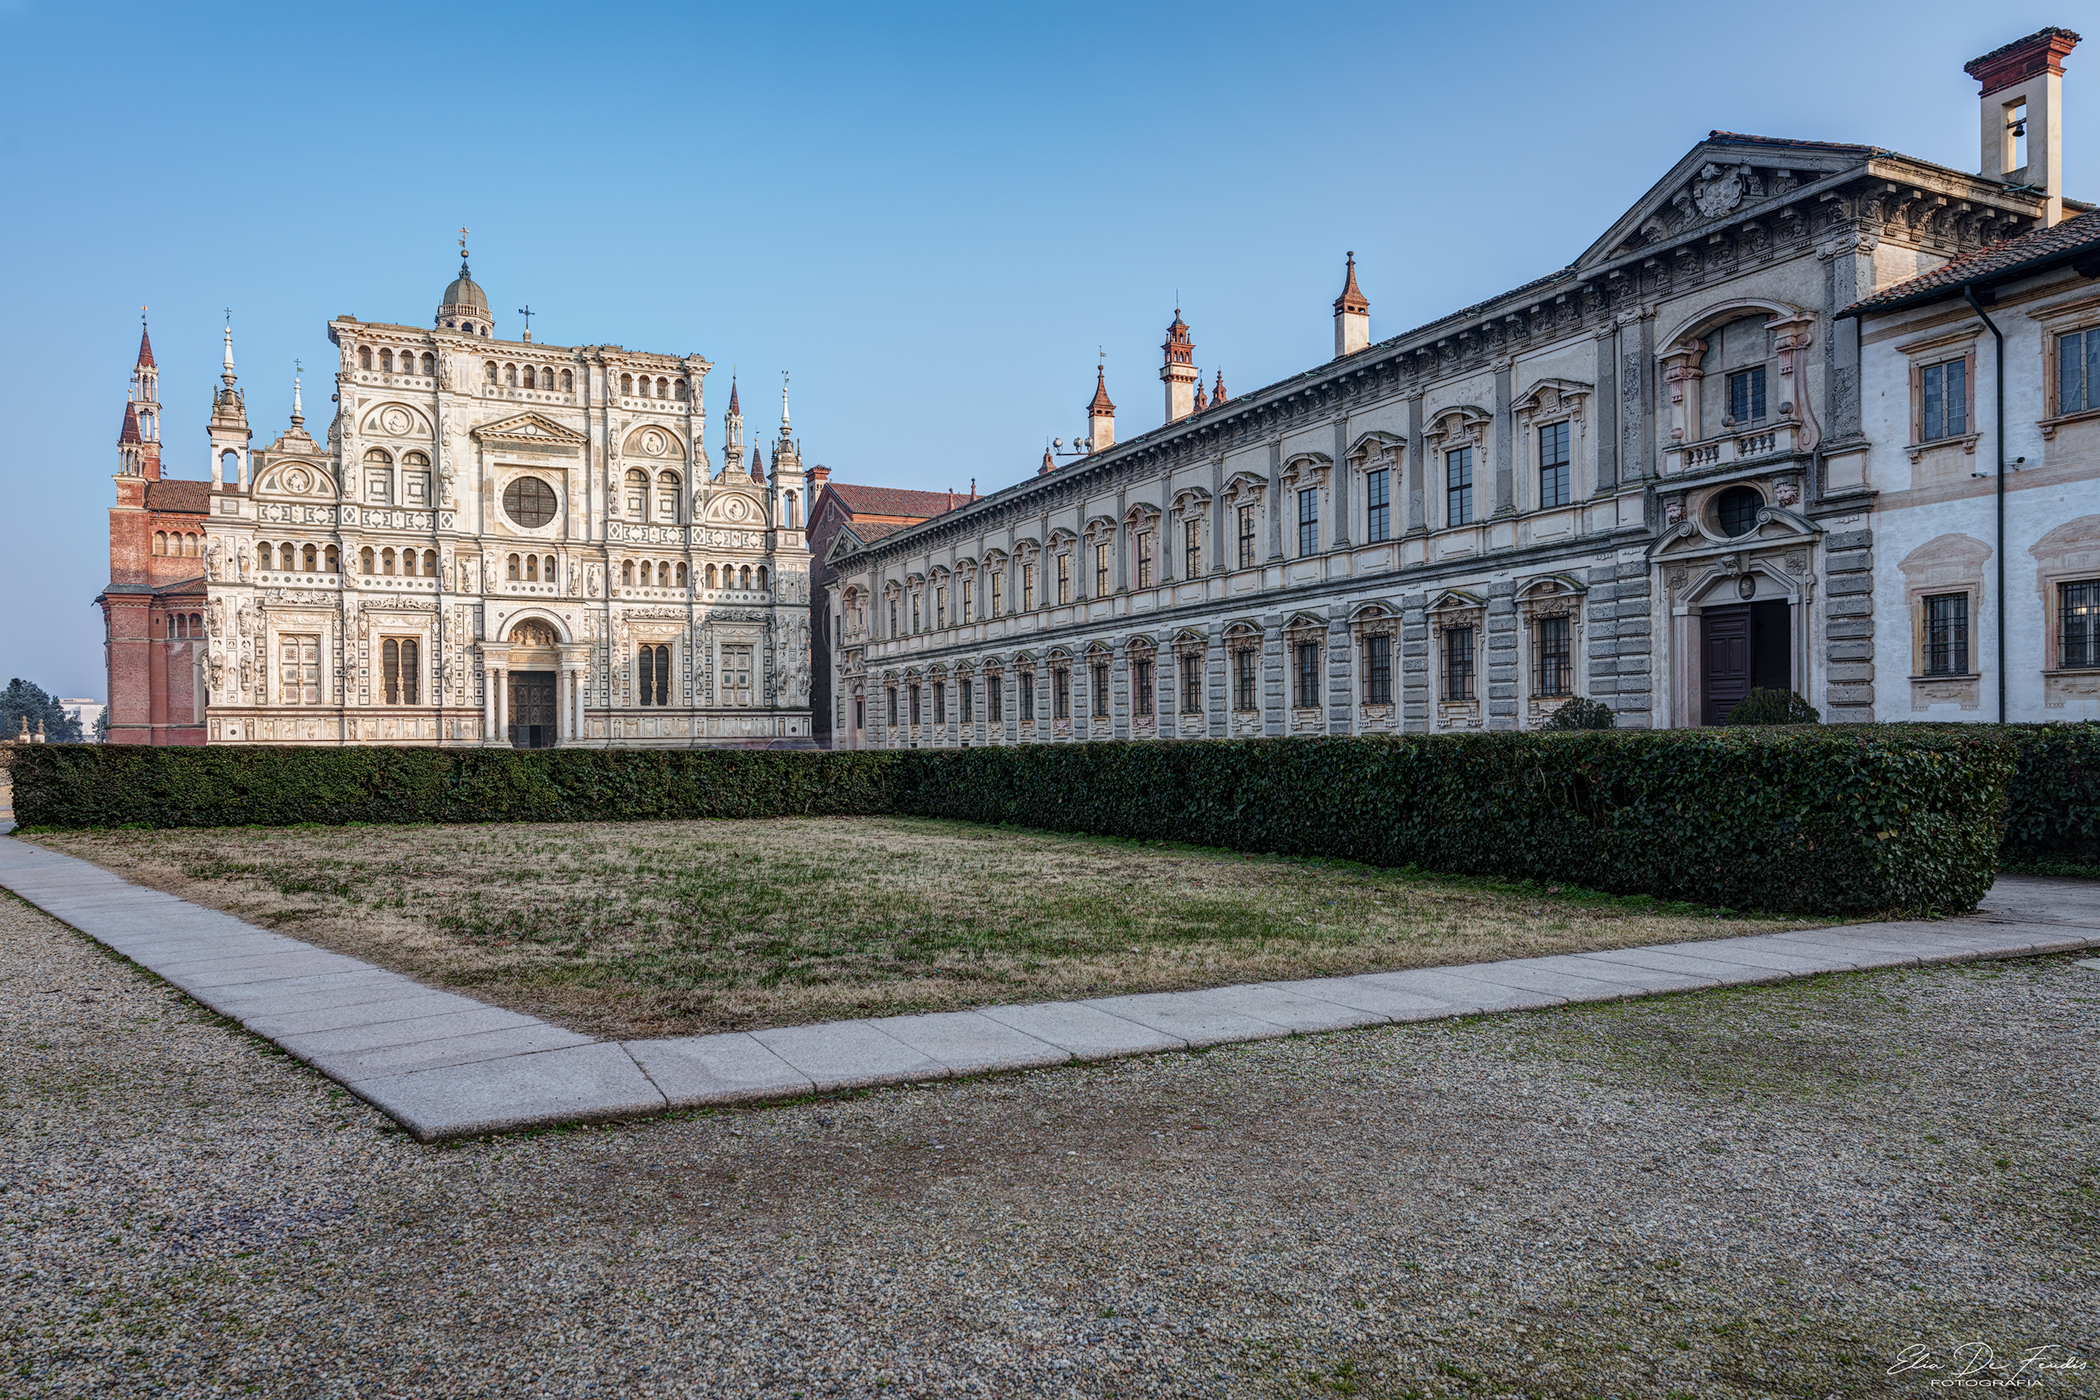 His Majesty, the Certosa di Pavia...